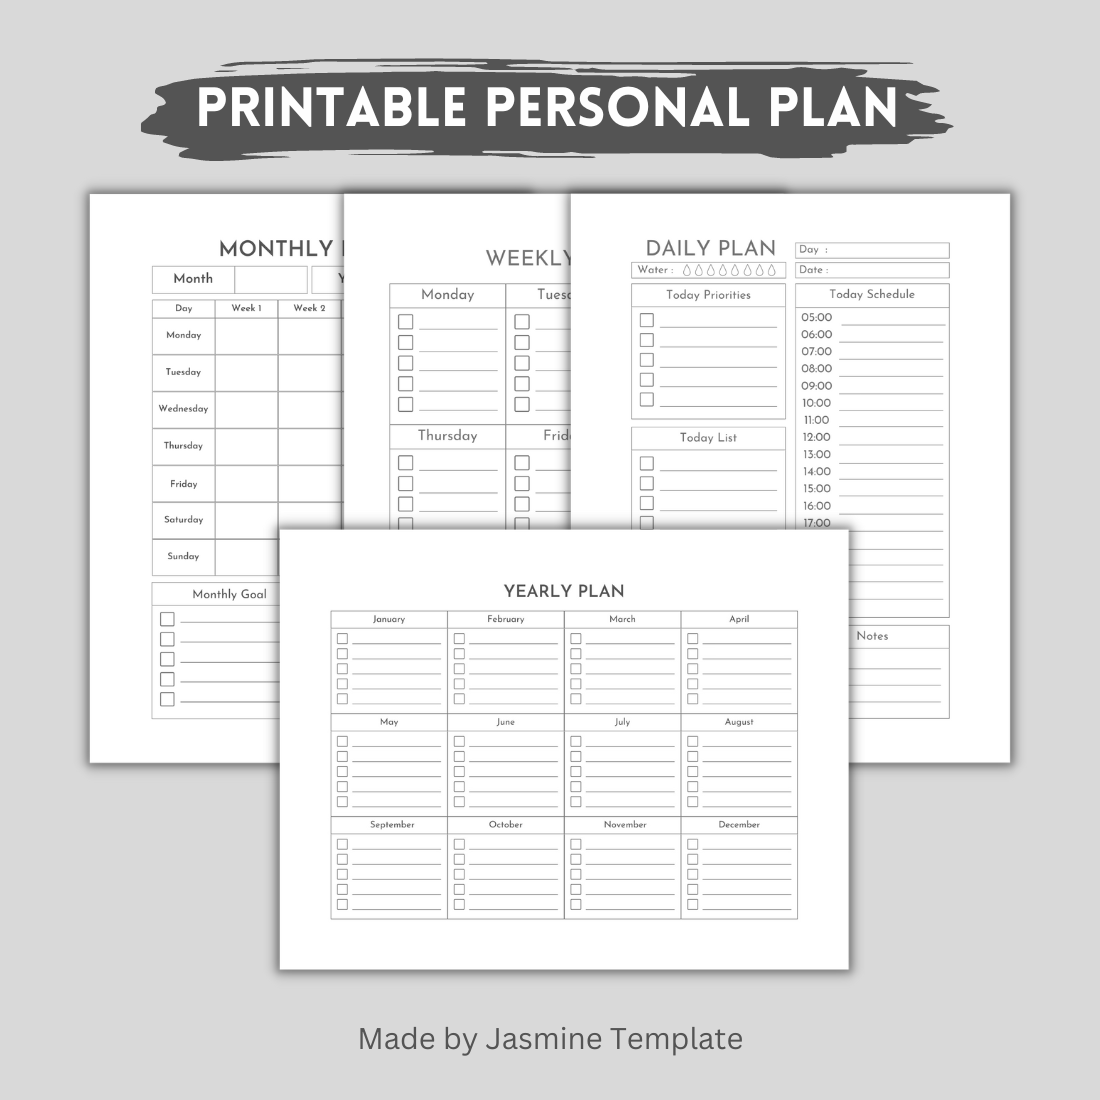 Printable Personal Plan cover image.